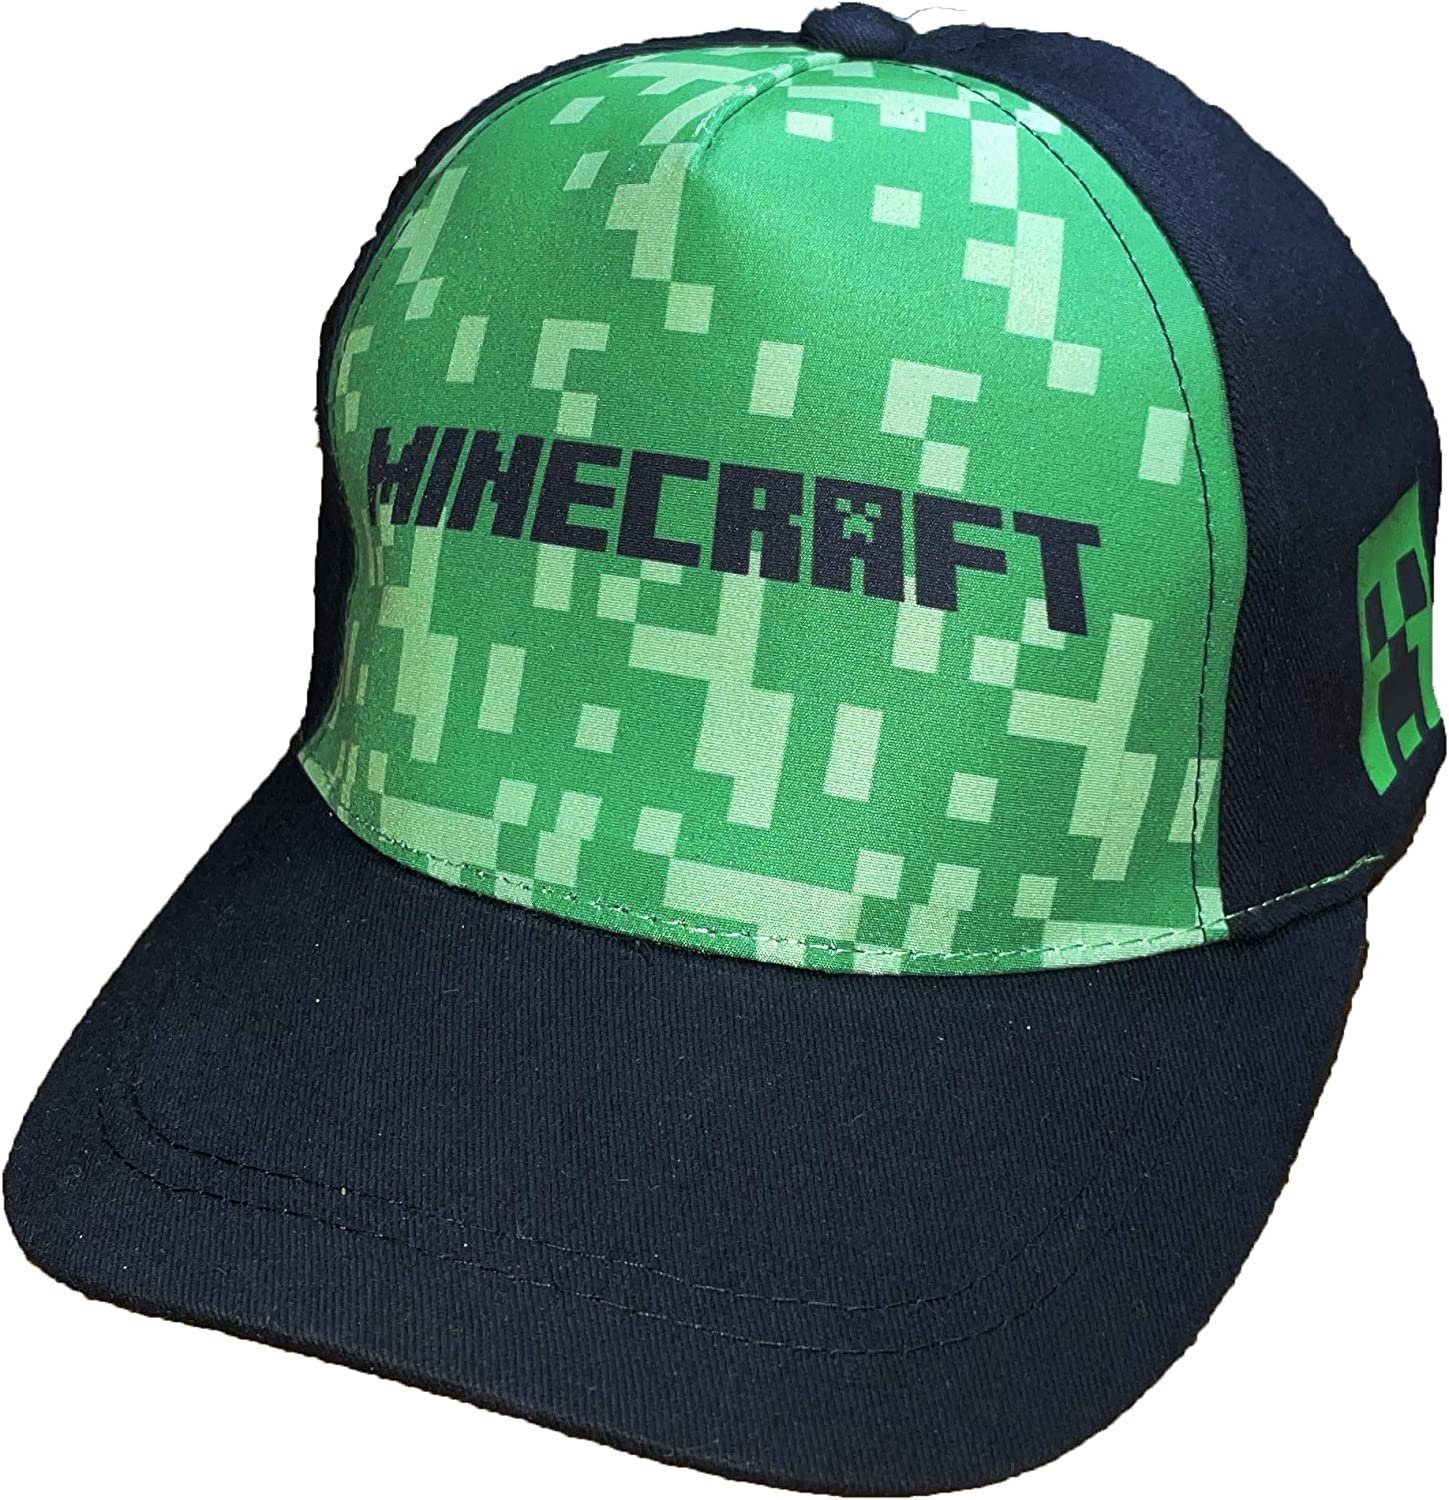 Minecraft Baseball Cap Minecraft Creeper Cap Kappe Baseball Cap Mütze Hut Grün